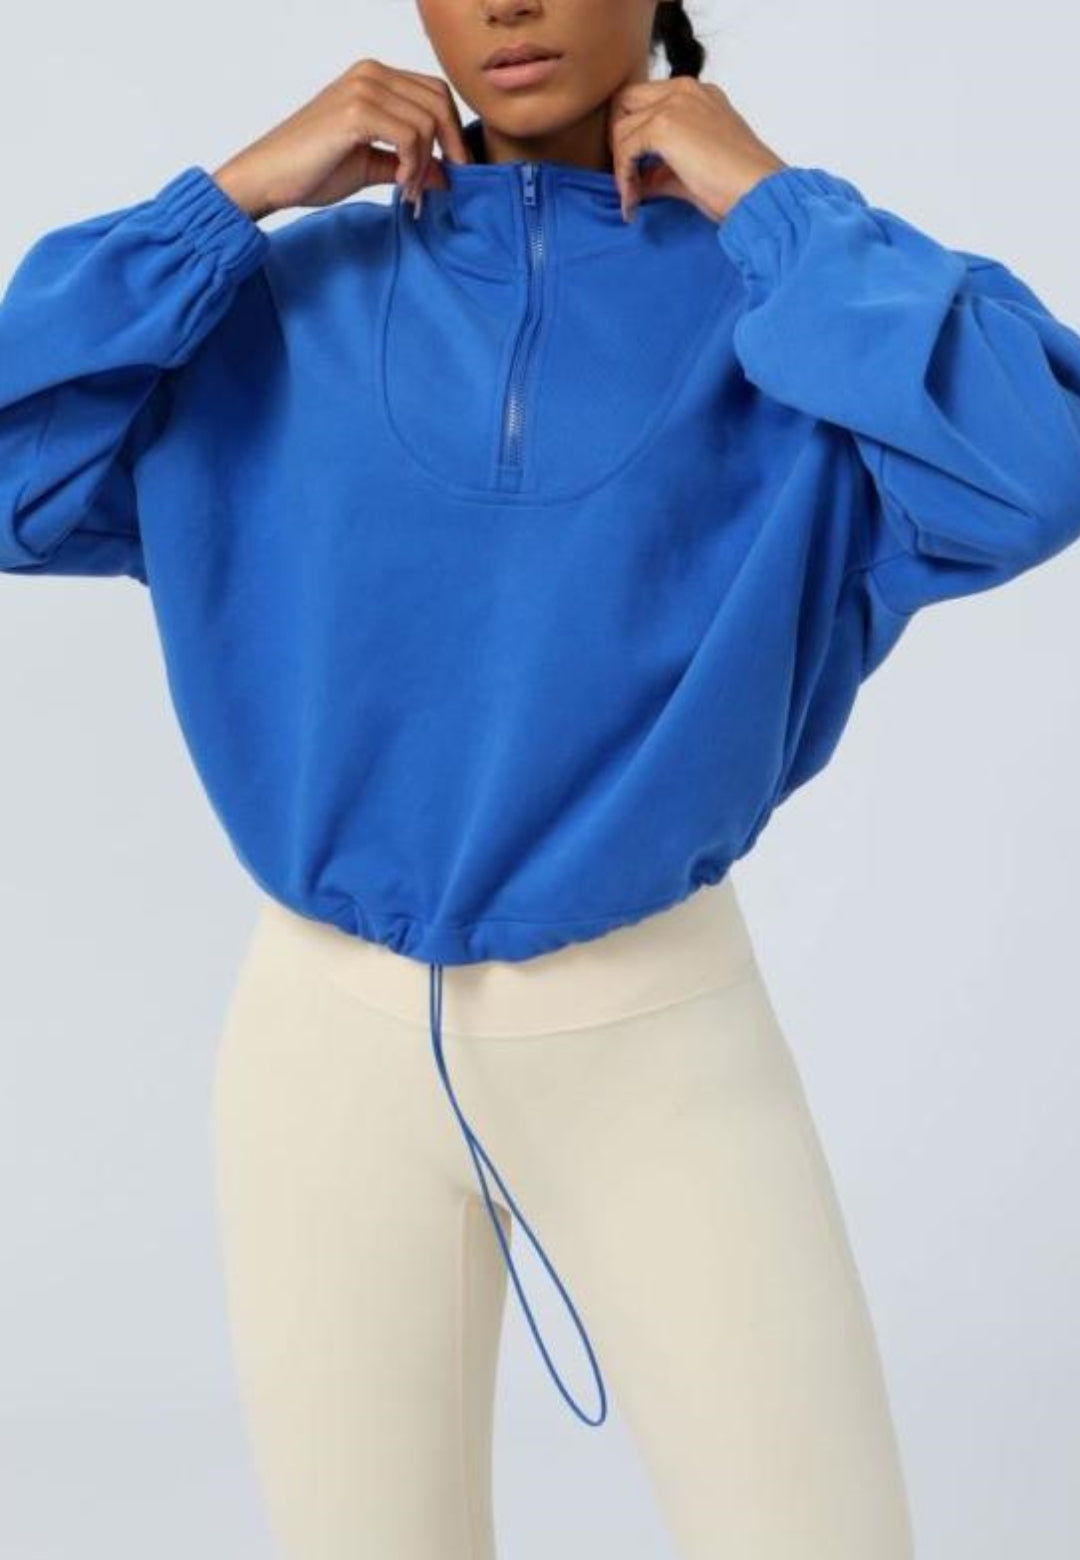 Loose Long Sleeve Casual Zipper Jacket Sport Sweatshirt